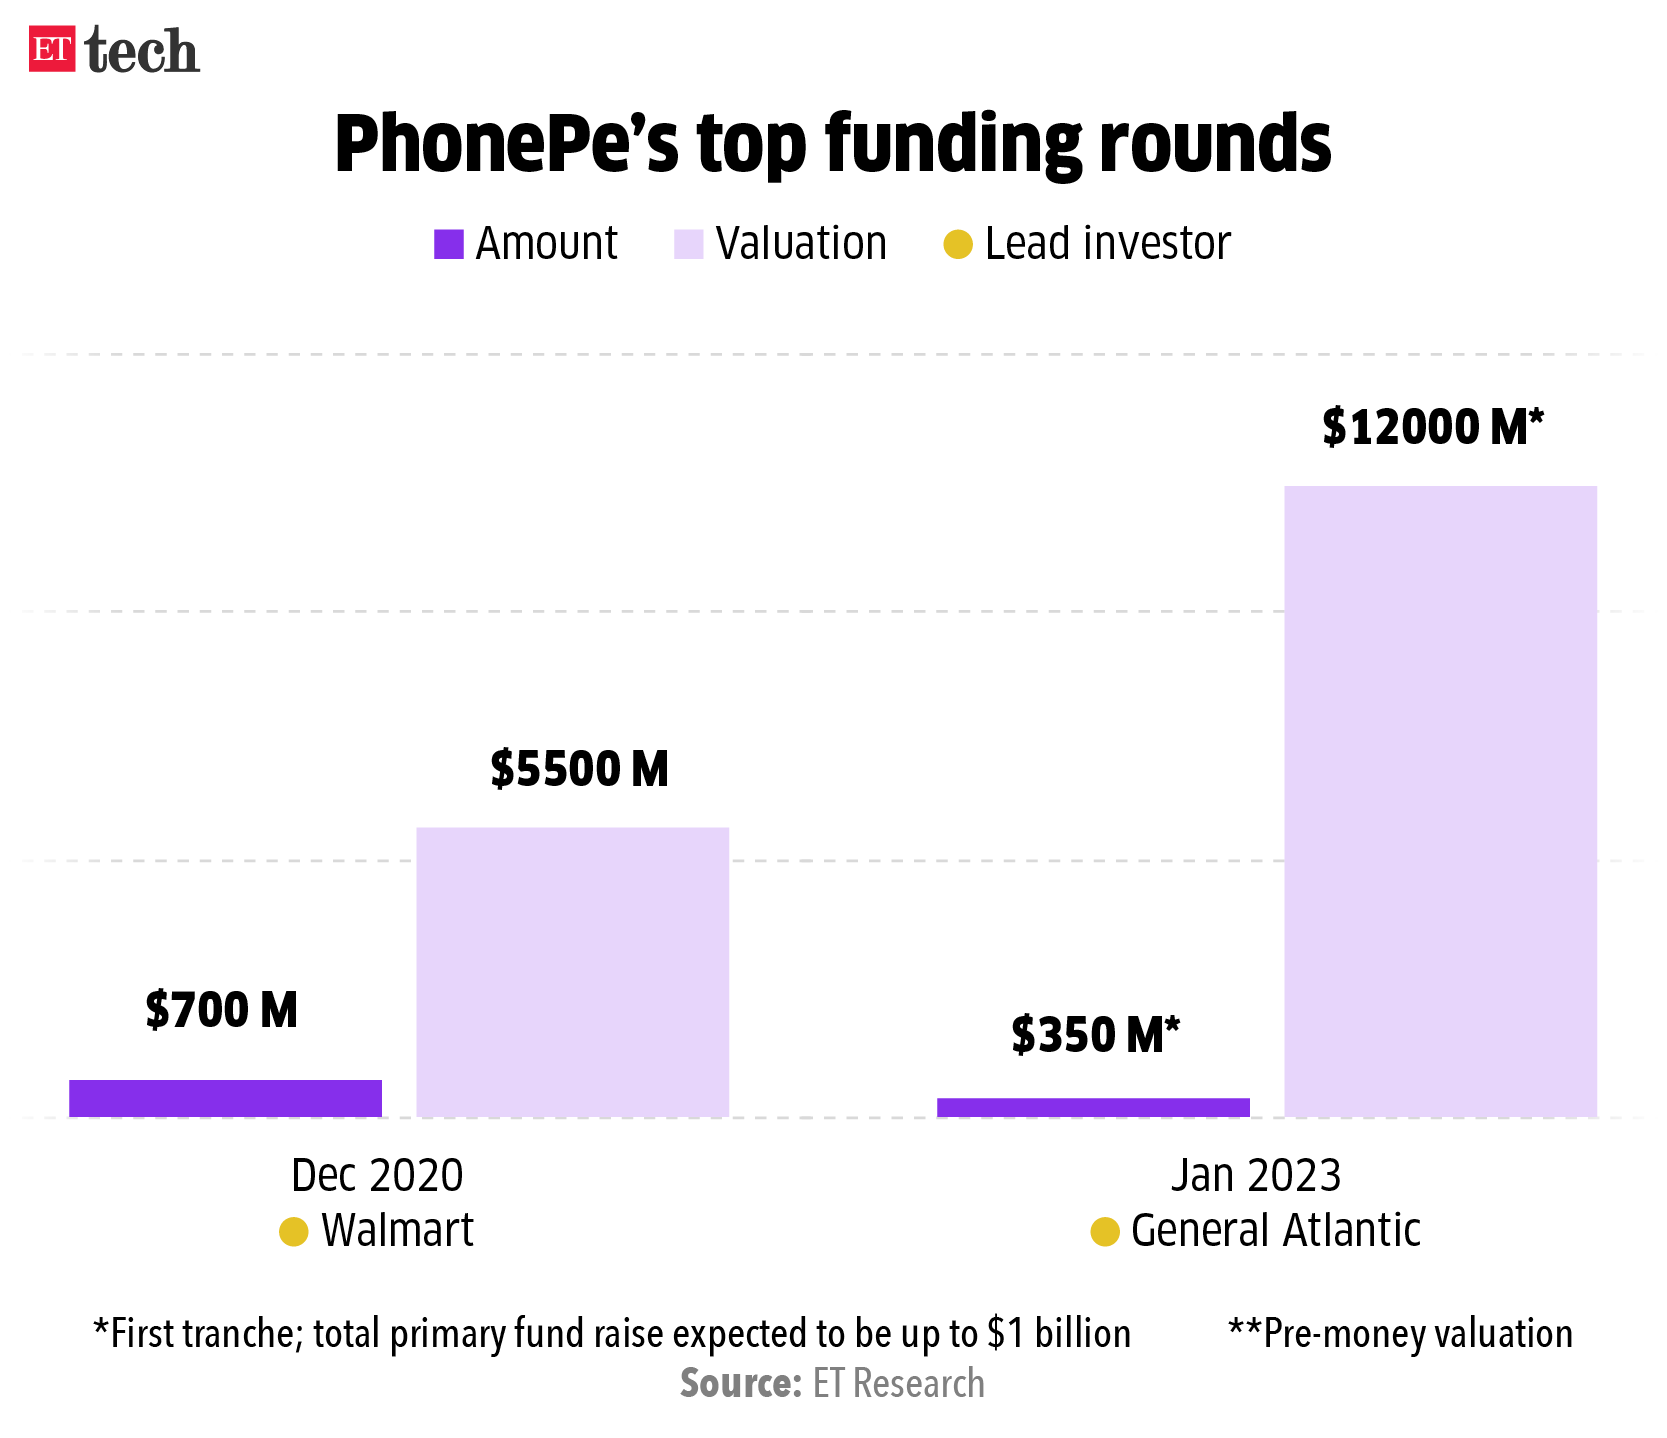 PhonePe’s top funding